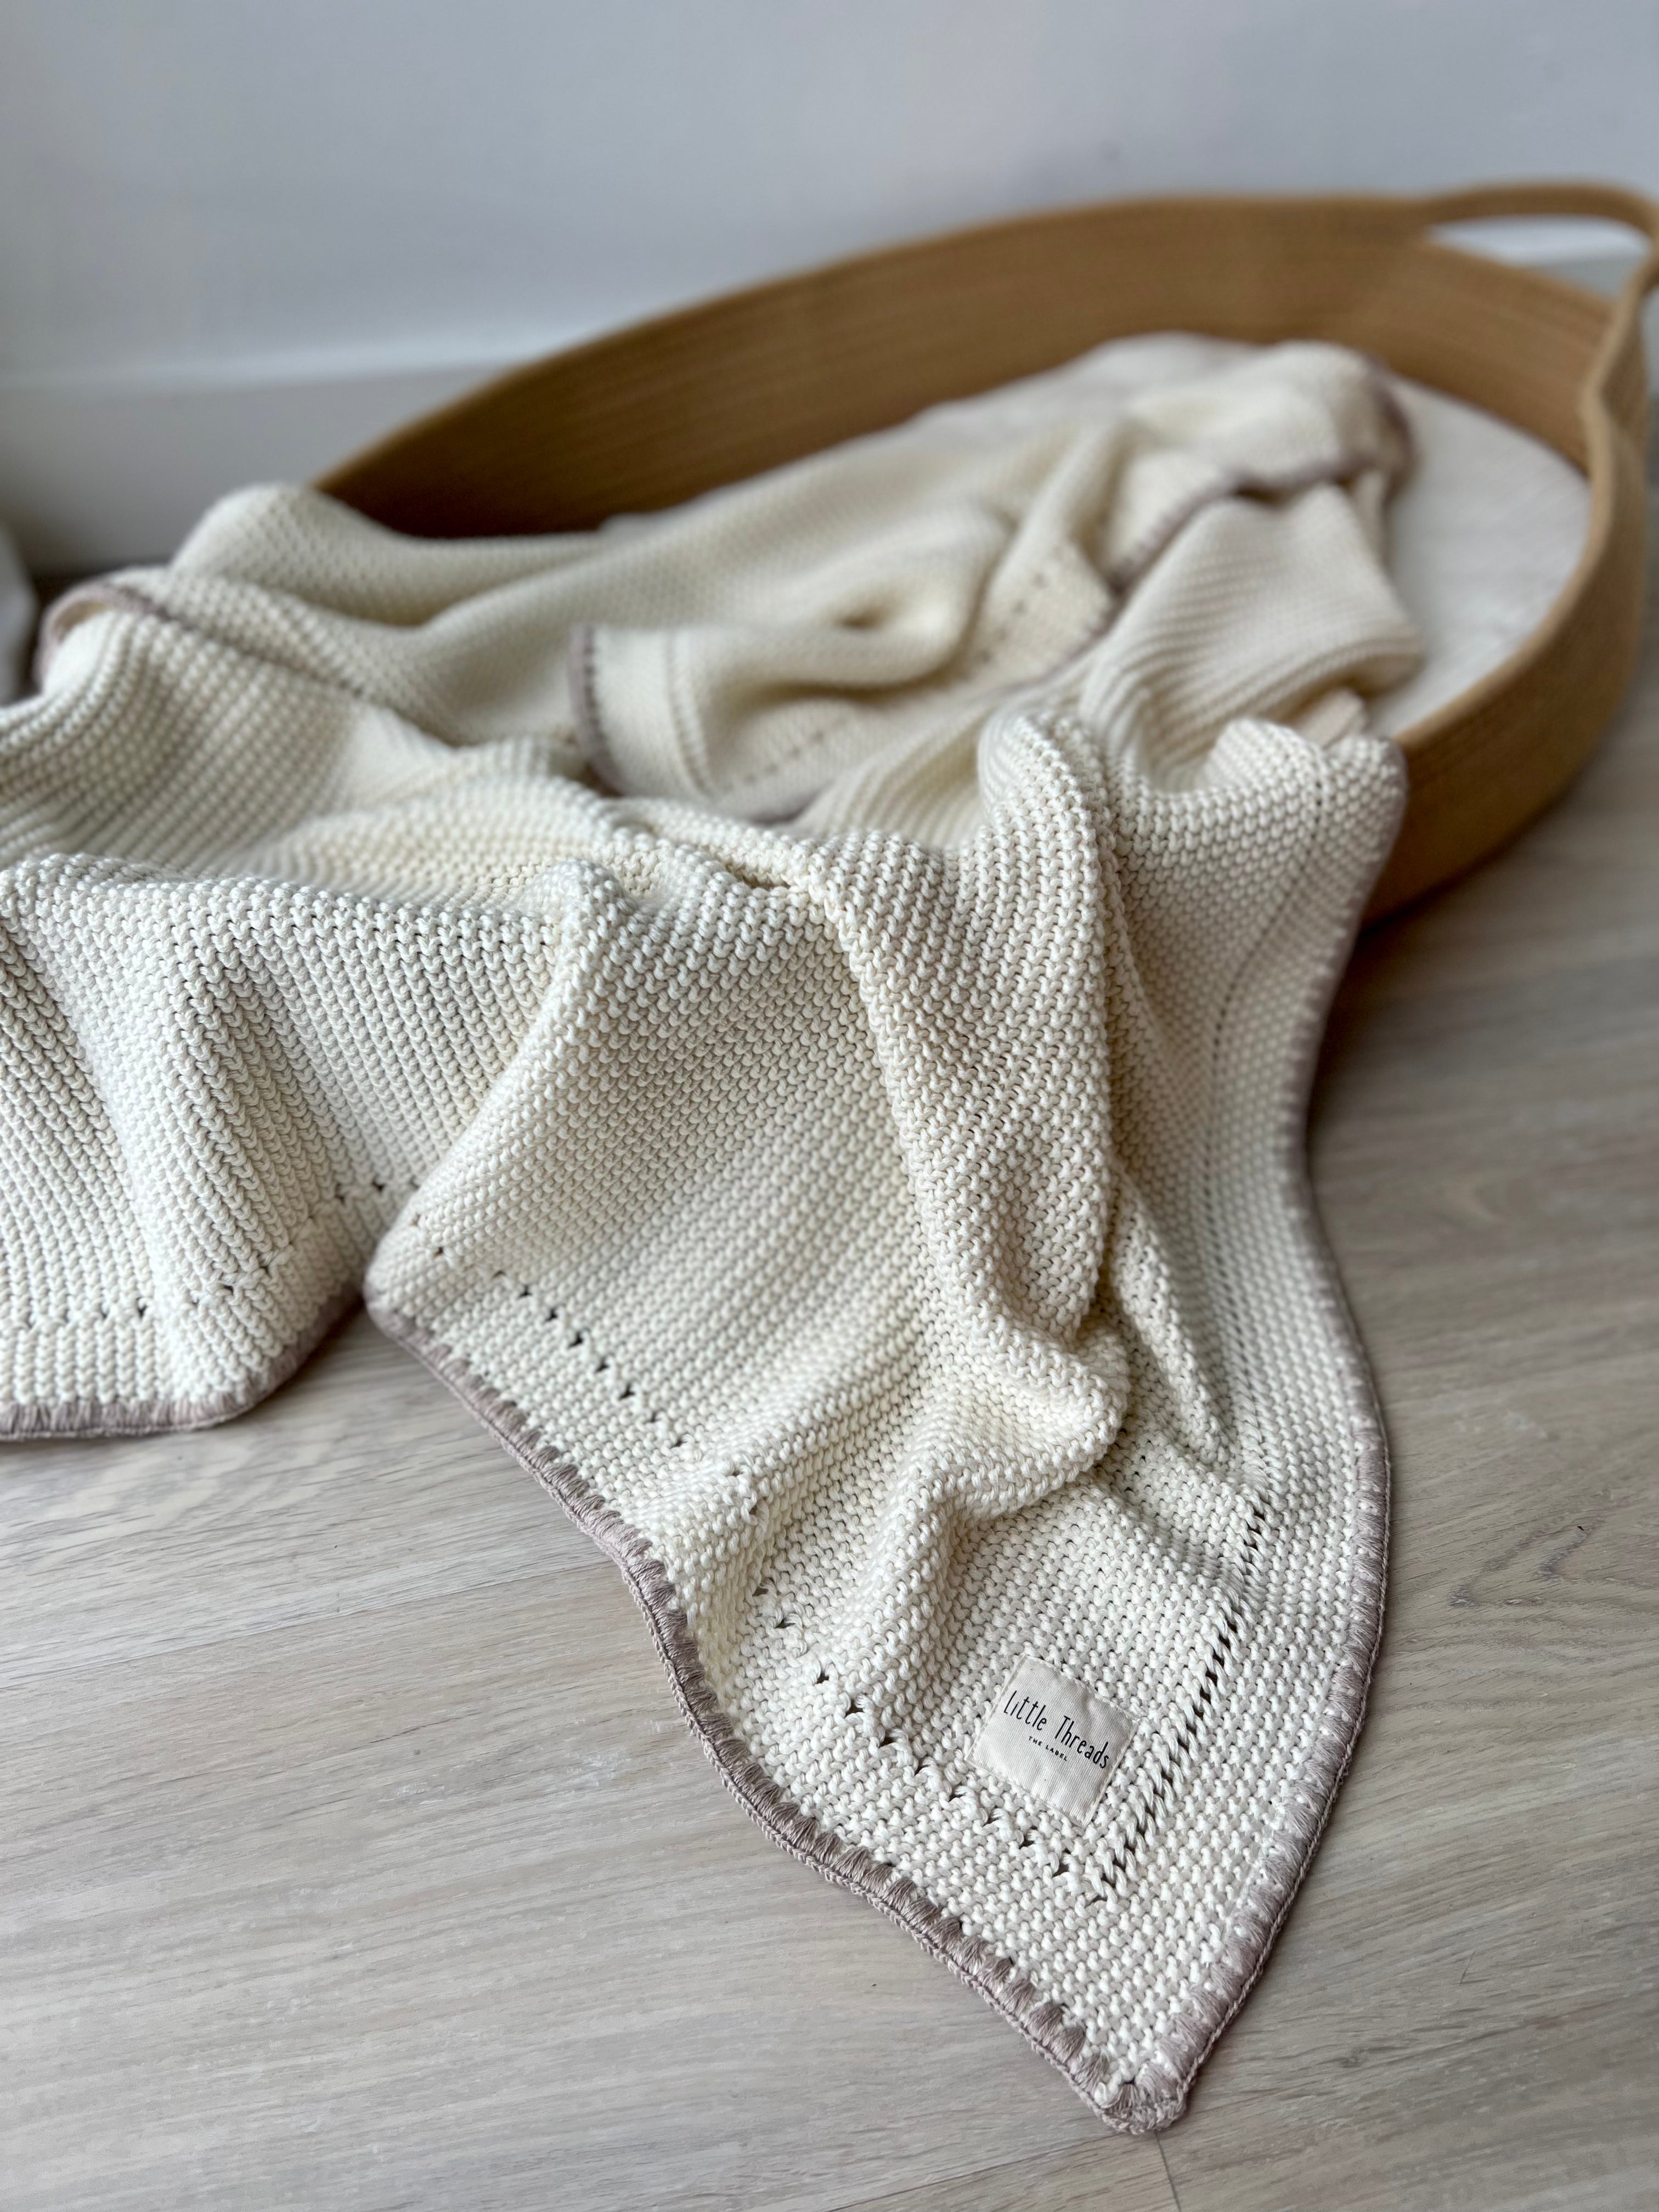 Oat Cream Knitted Cotton Blanket